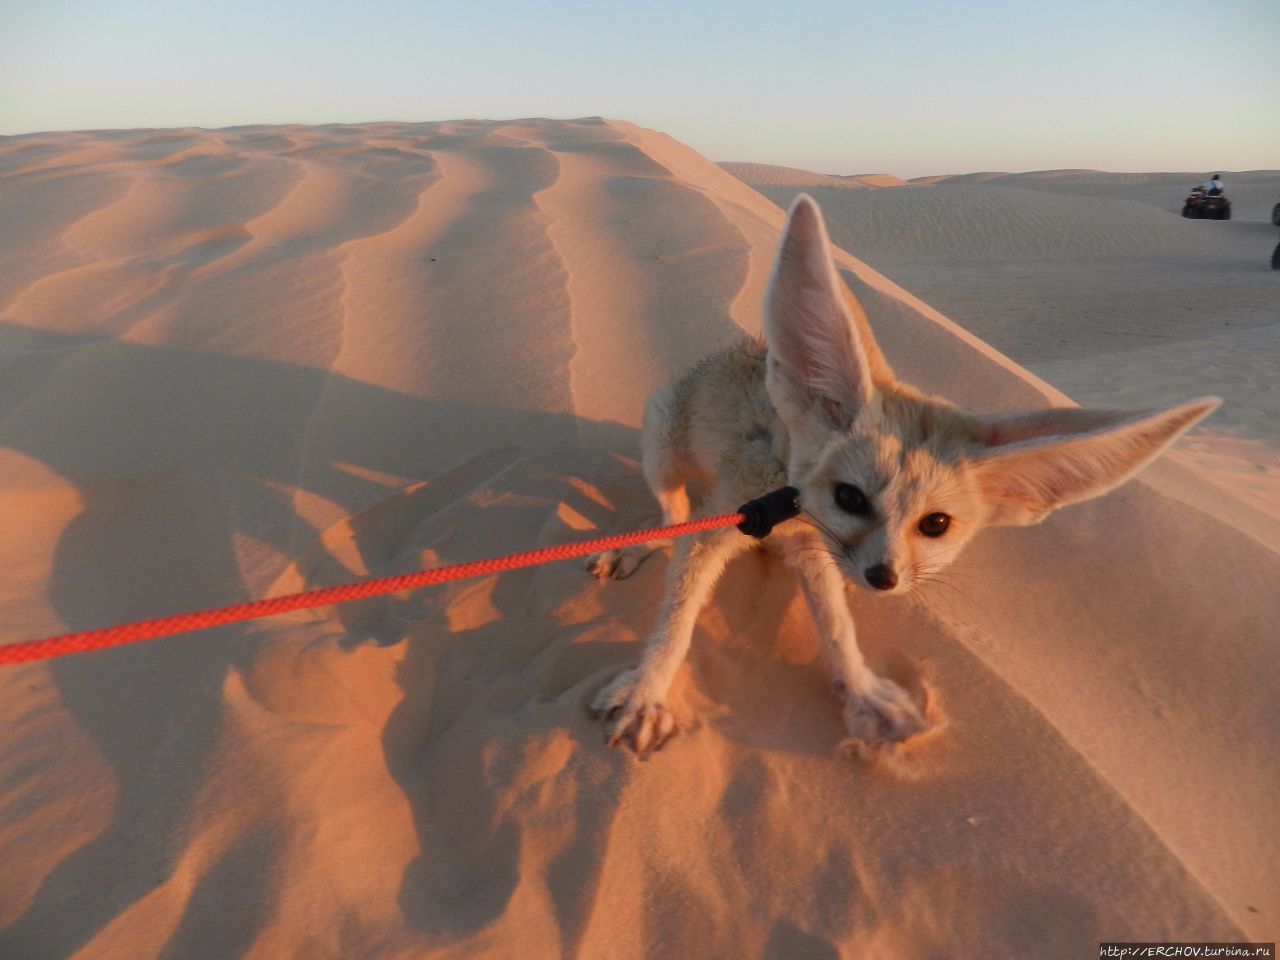 Экскурсия в Сахару. Ч — 4. Катание на верблюдах Дуз, Тунис